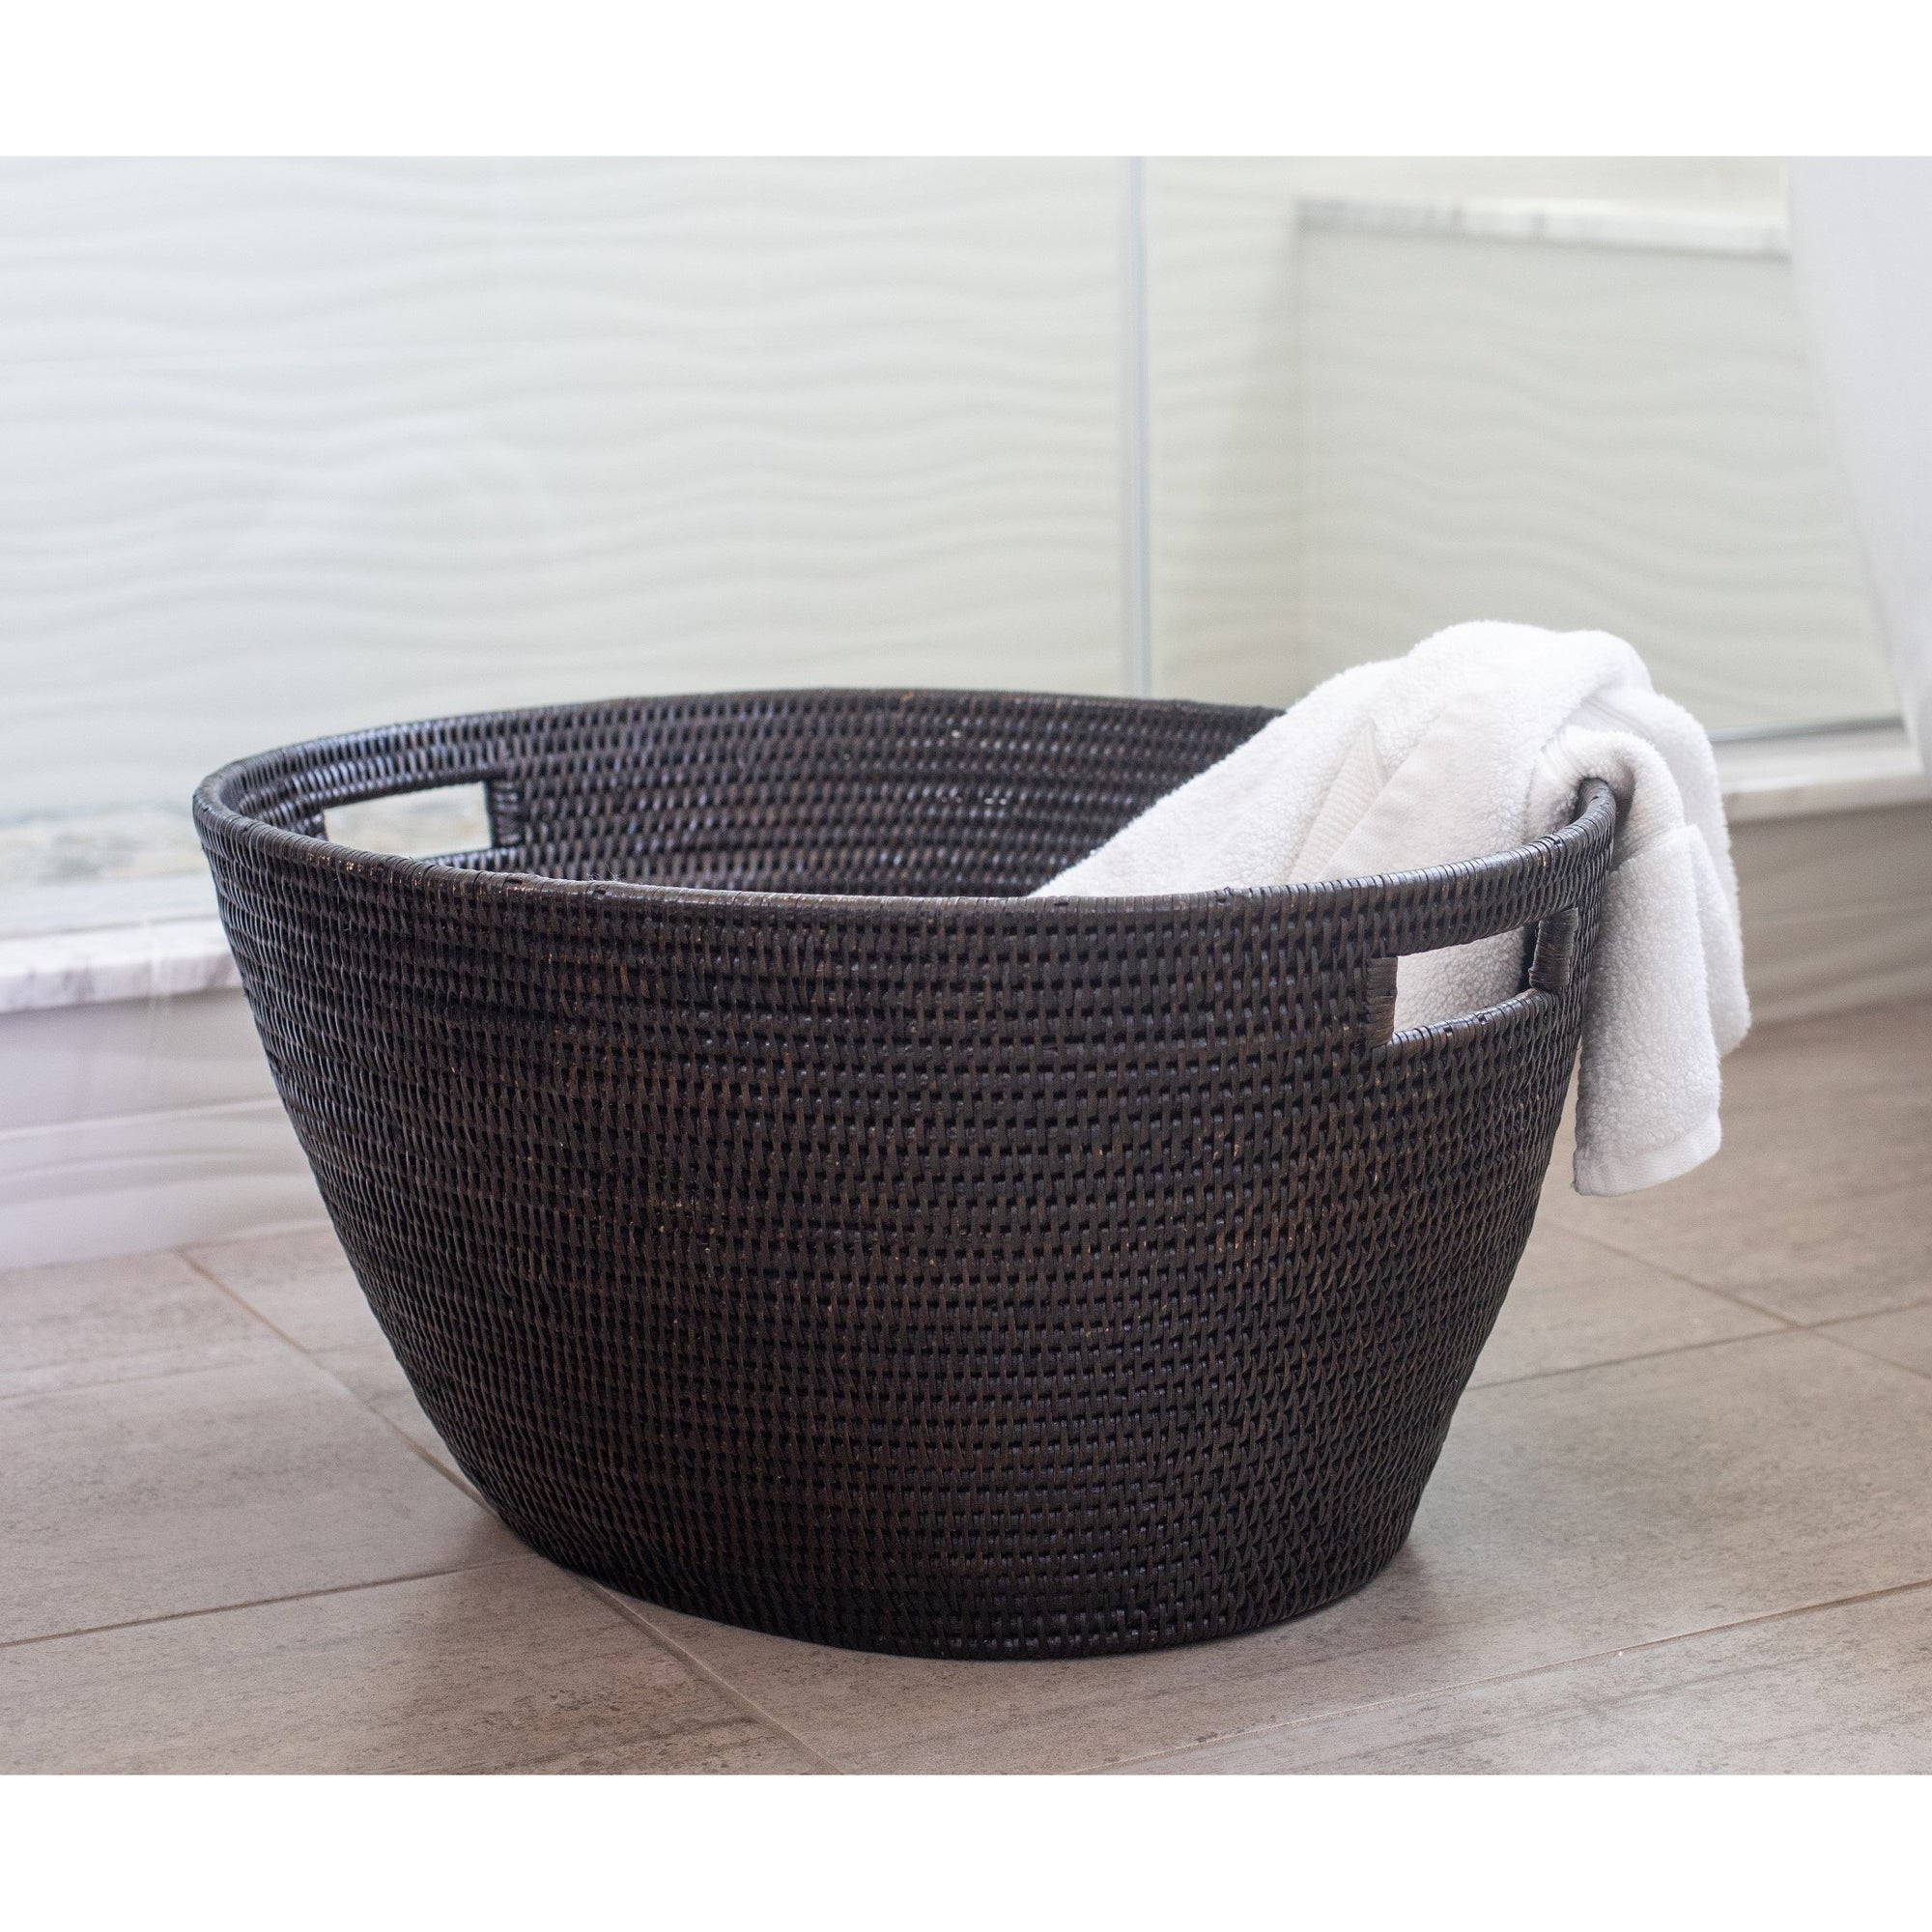 Tudor Black Rounded Laundry Basket with Cutout Handles 